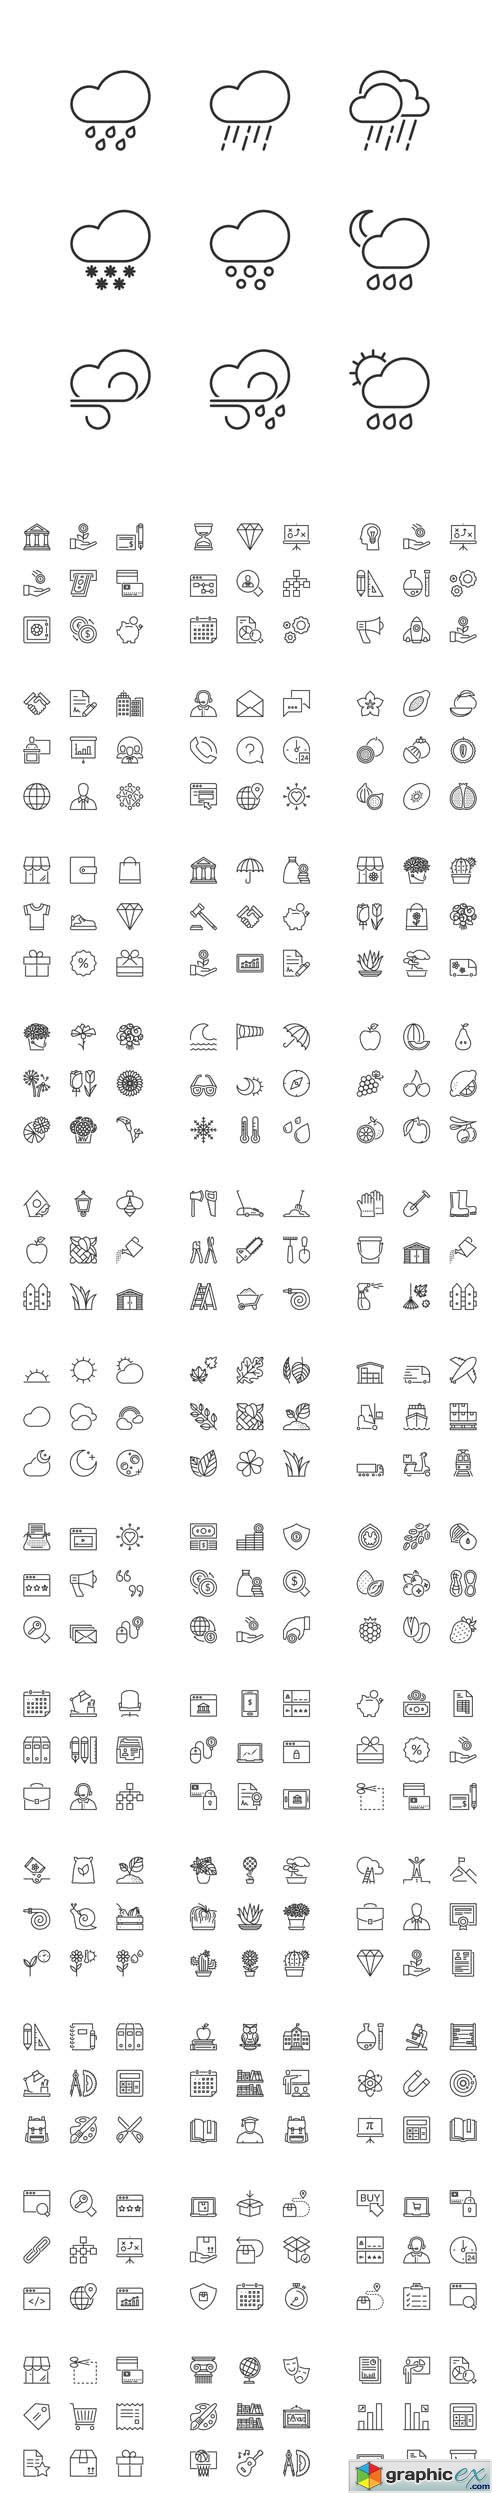 Different Line Icons. Flat Symbols